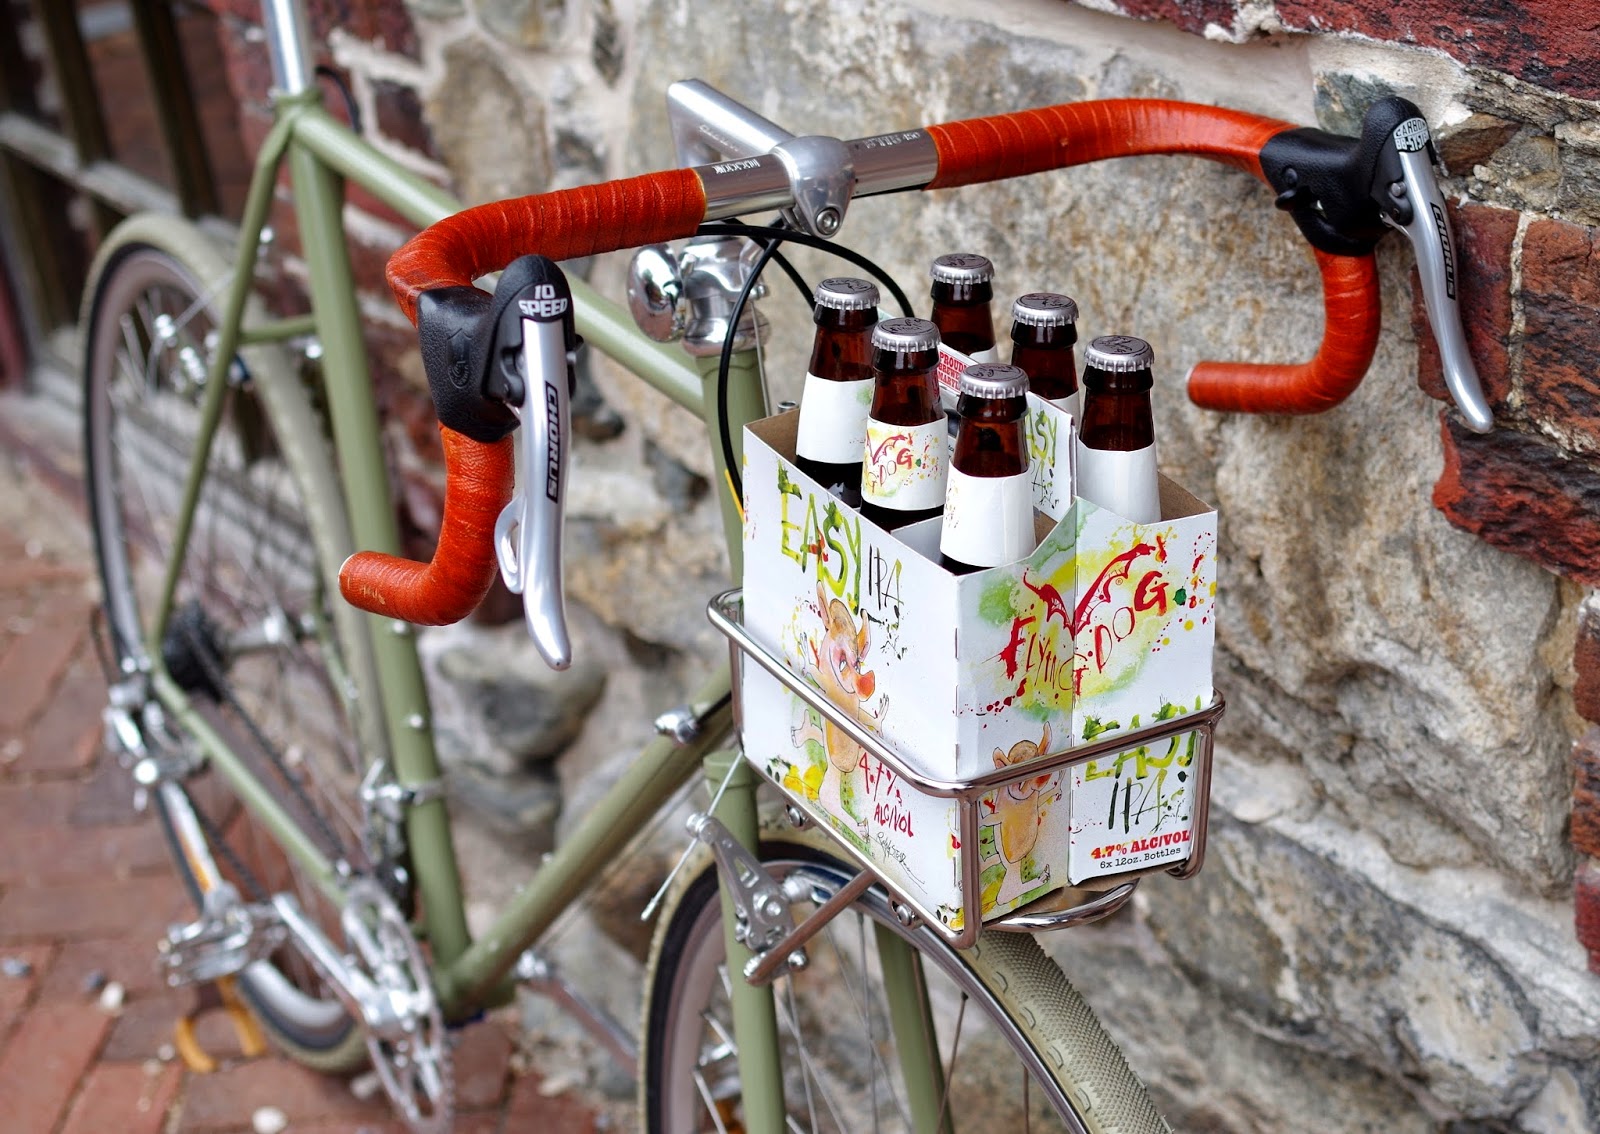 Porteur-Style 24-Pack Bike Rack